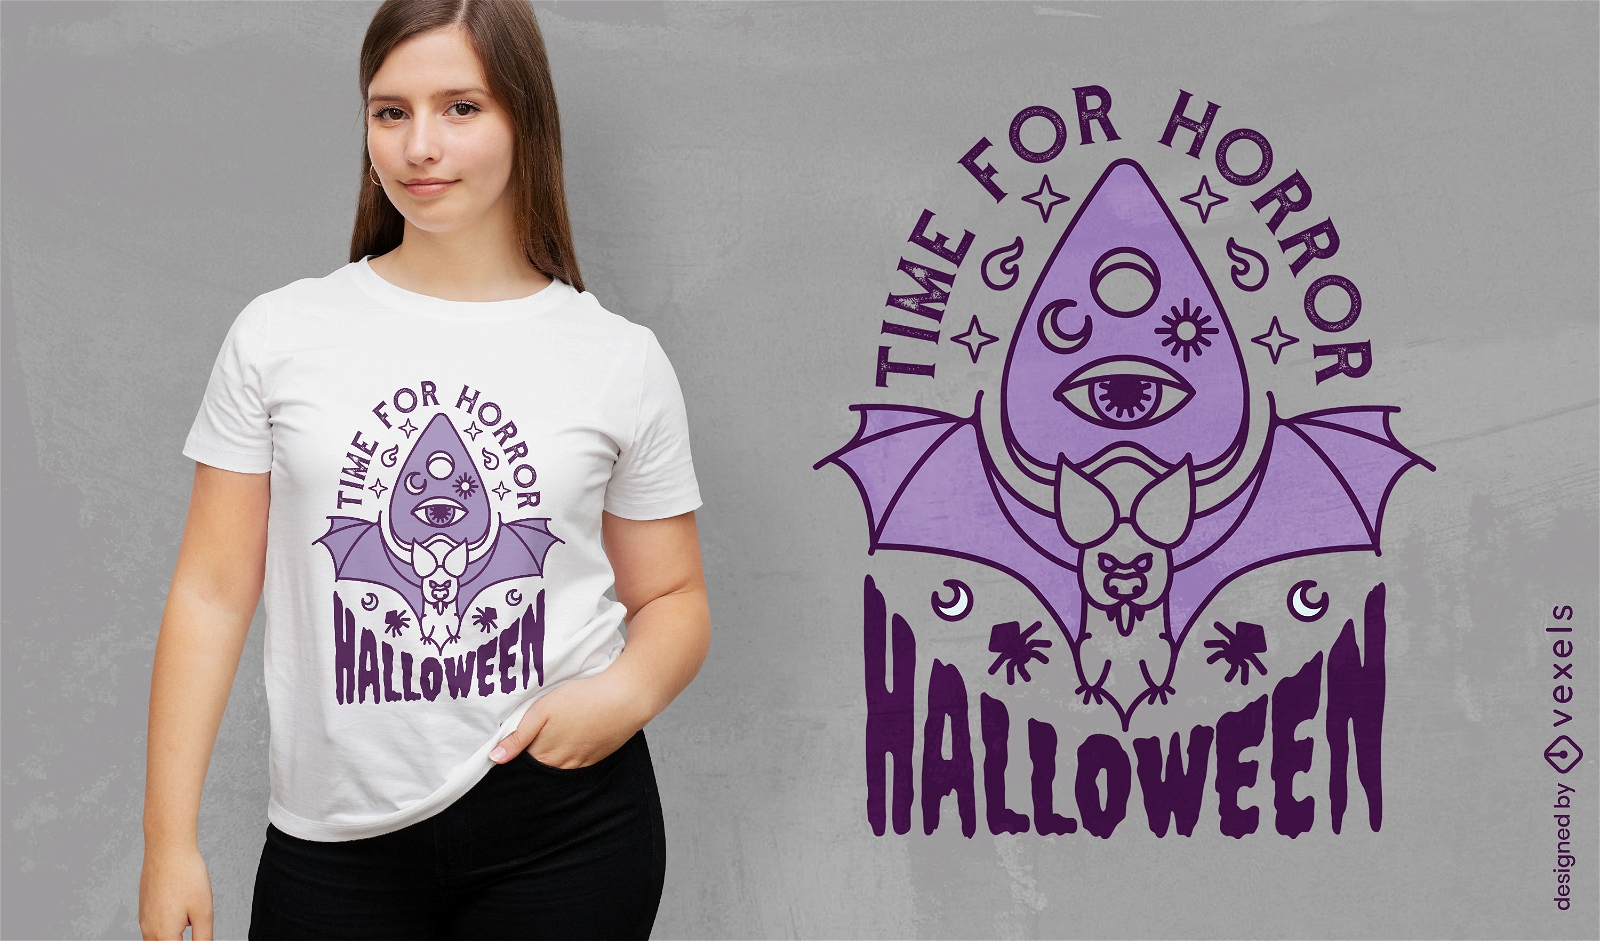 Time for horror Halloween bat t-shirt design